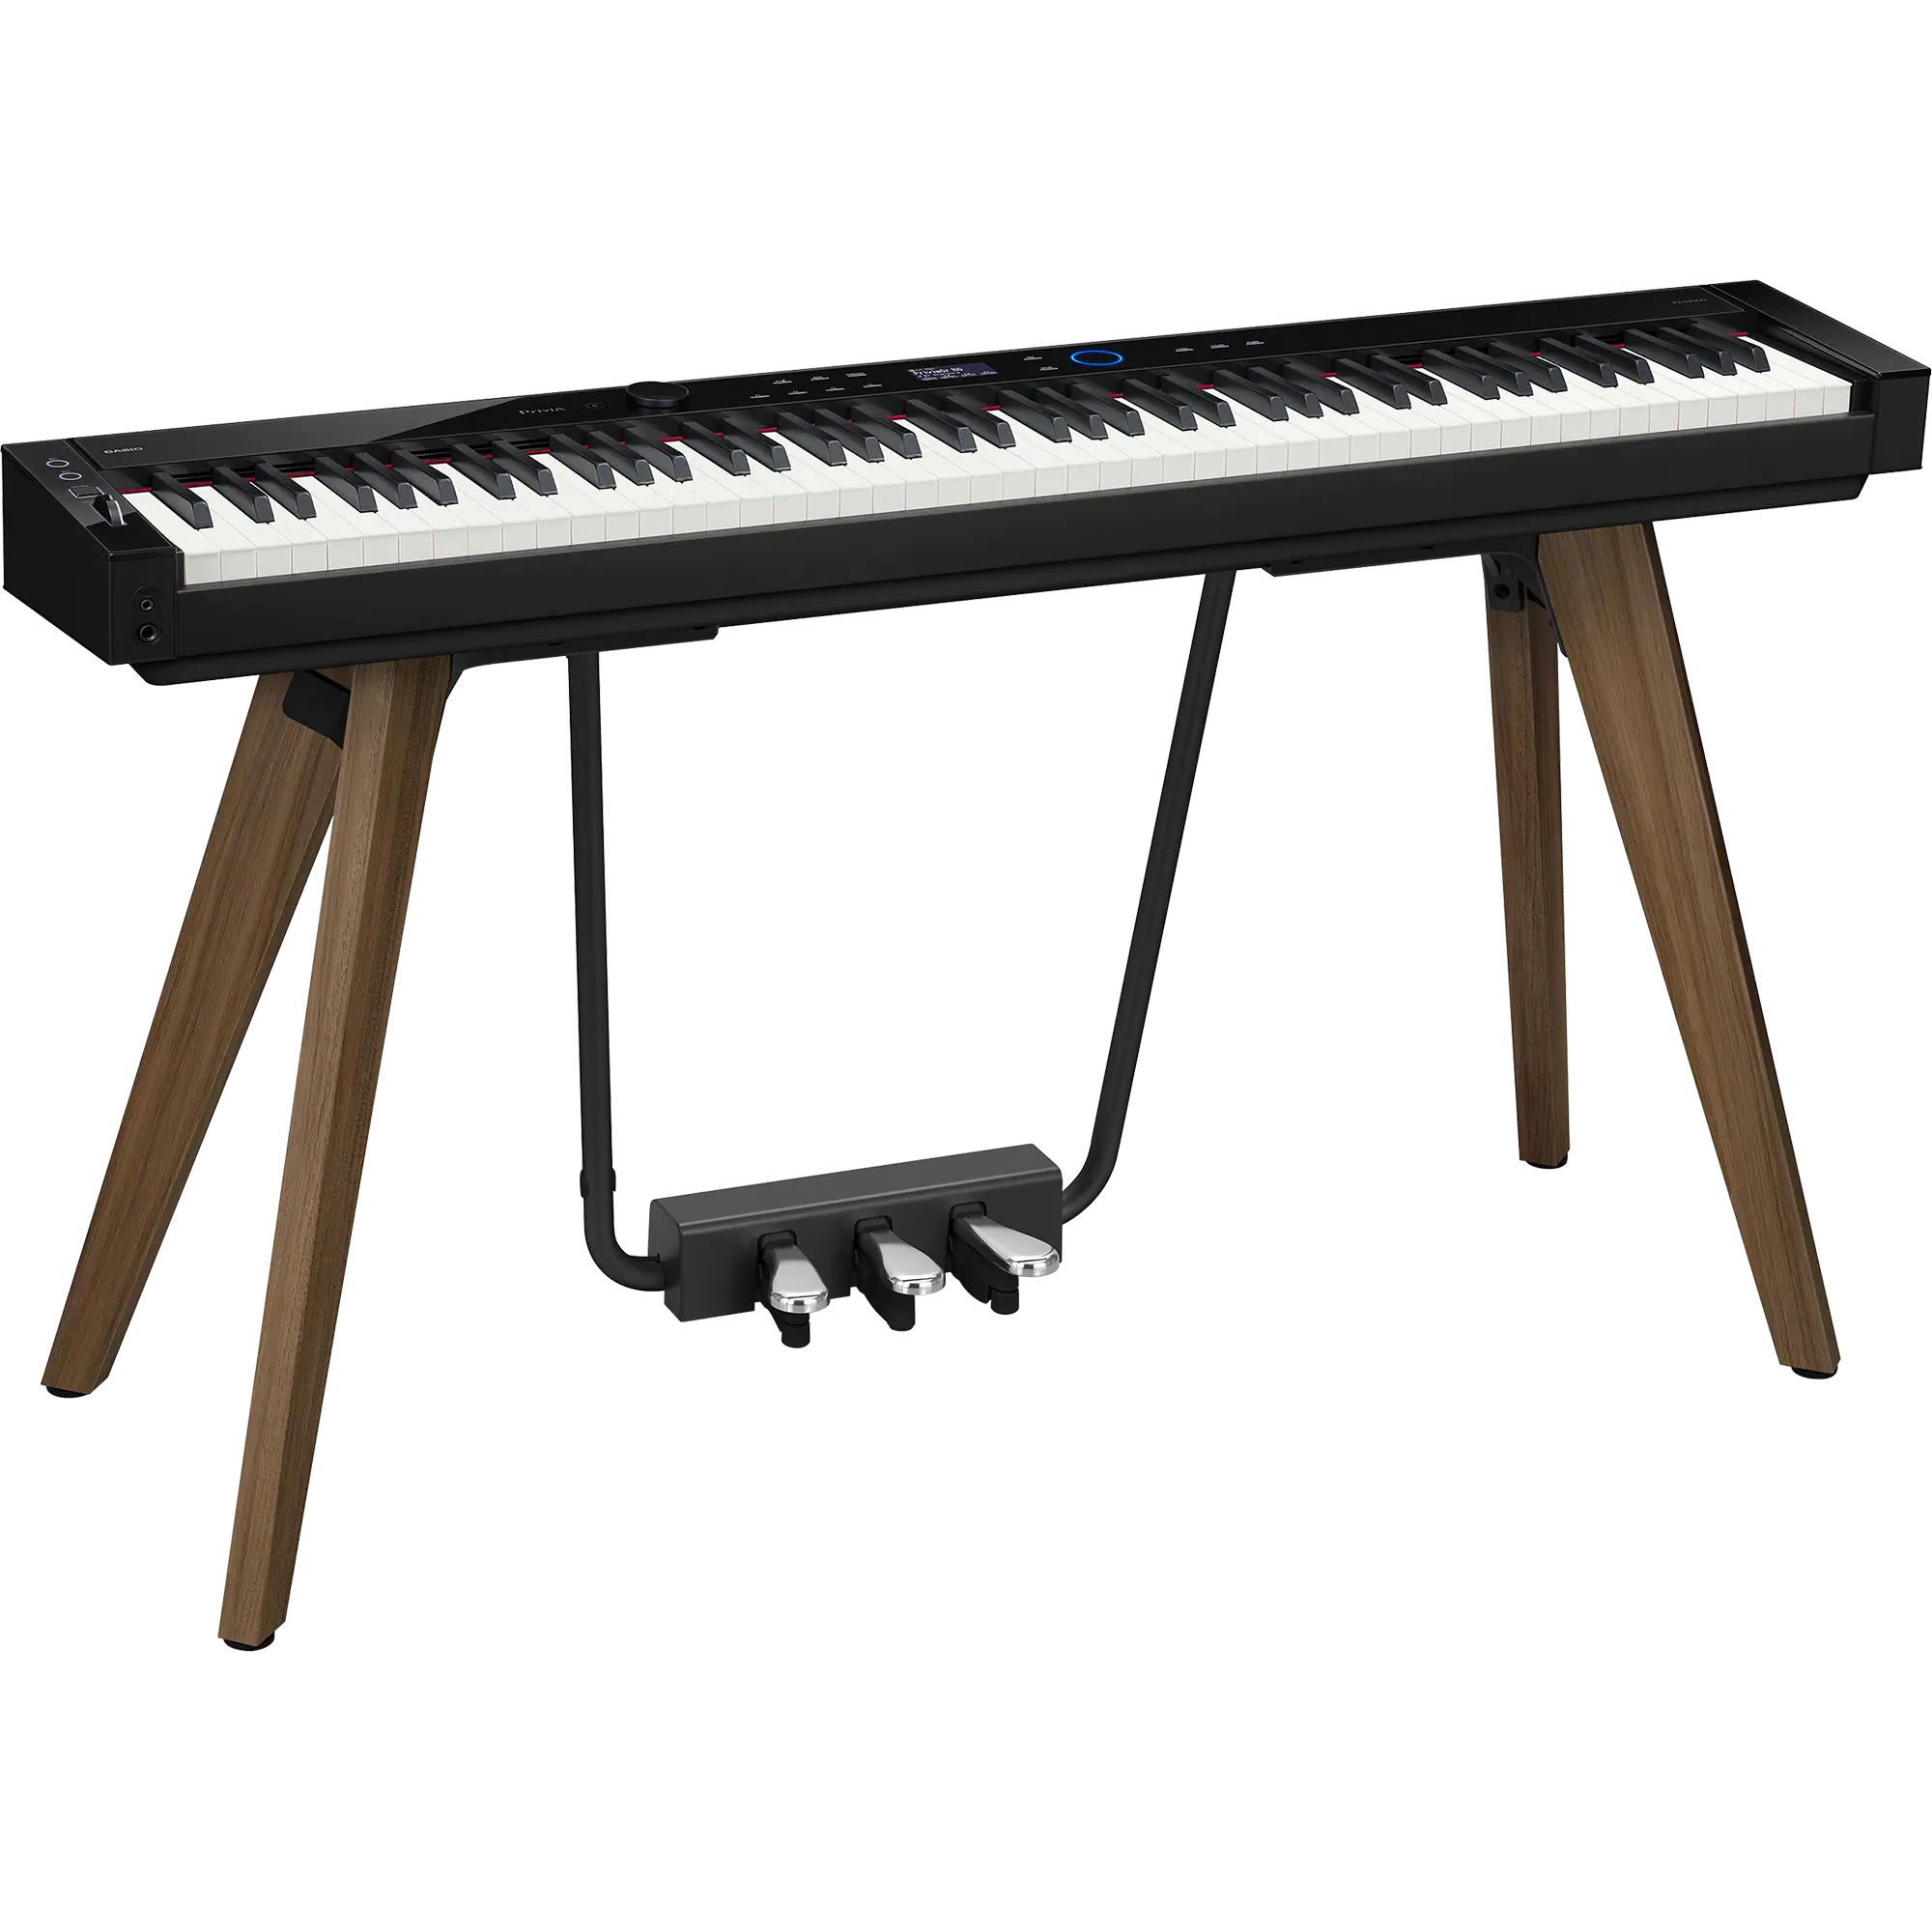 Casio PX-S7000 Digital Piano